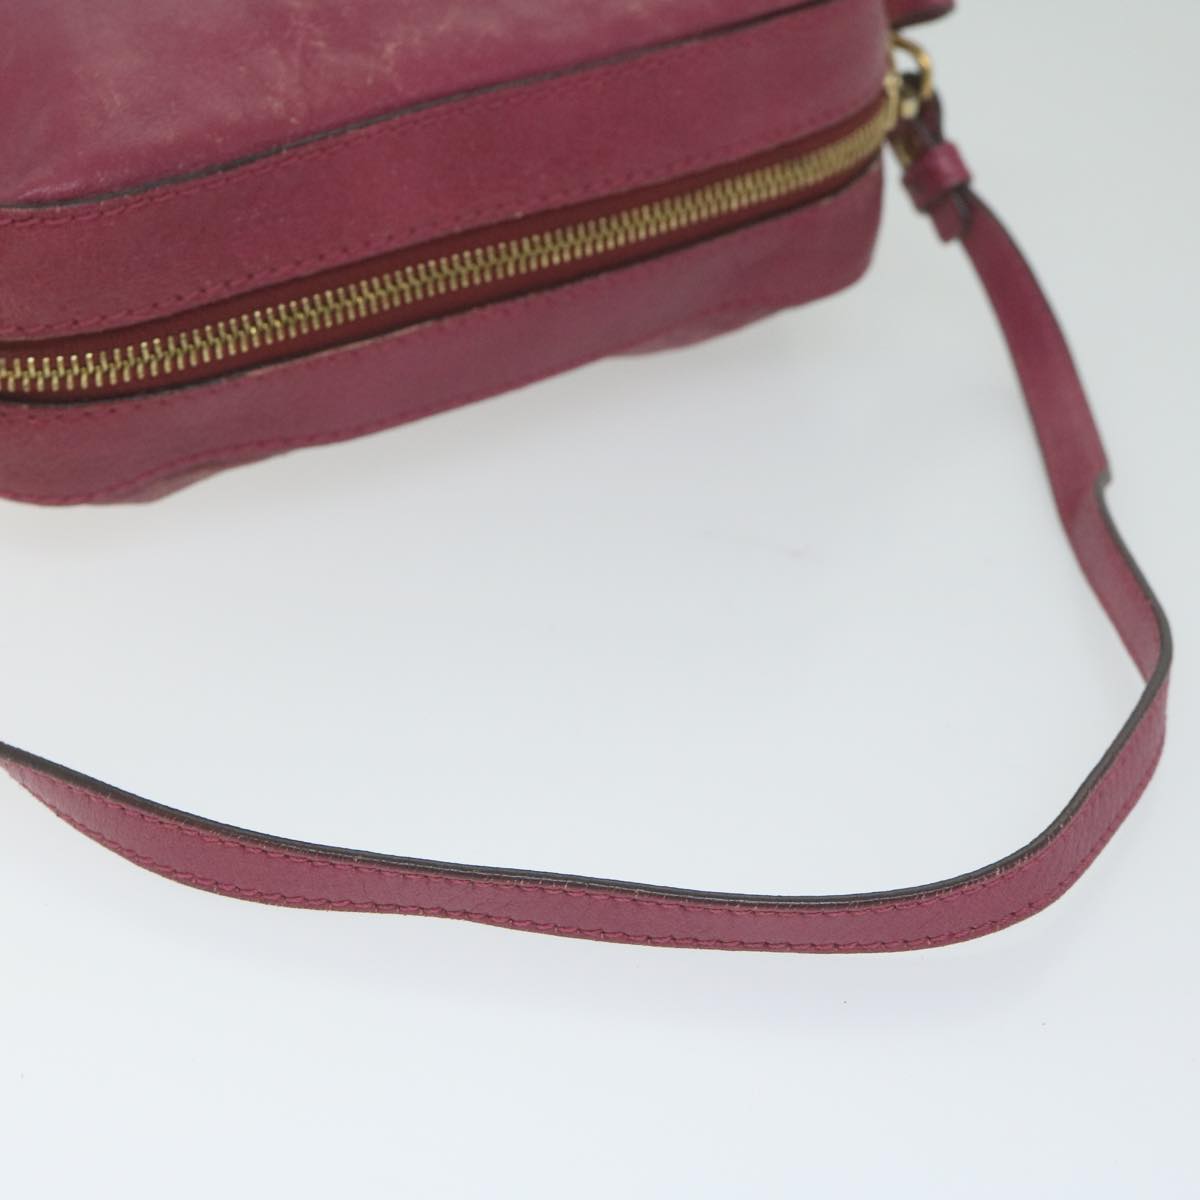 Chloe Shoulder Bag Leather Pink 01 12 51 65 5955 Auth ar11011